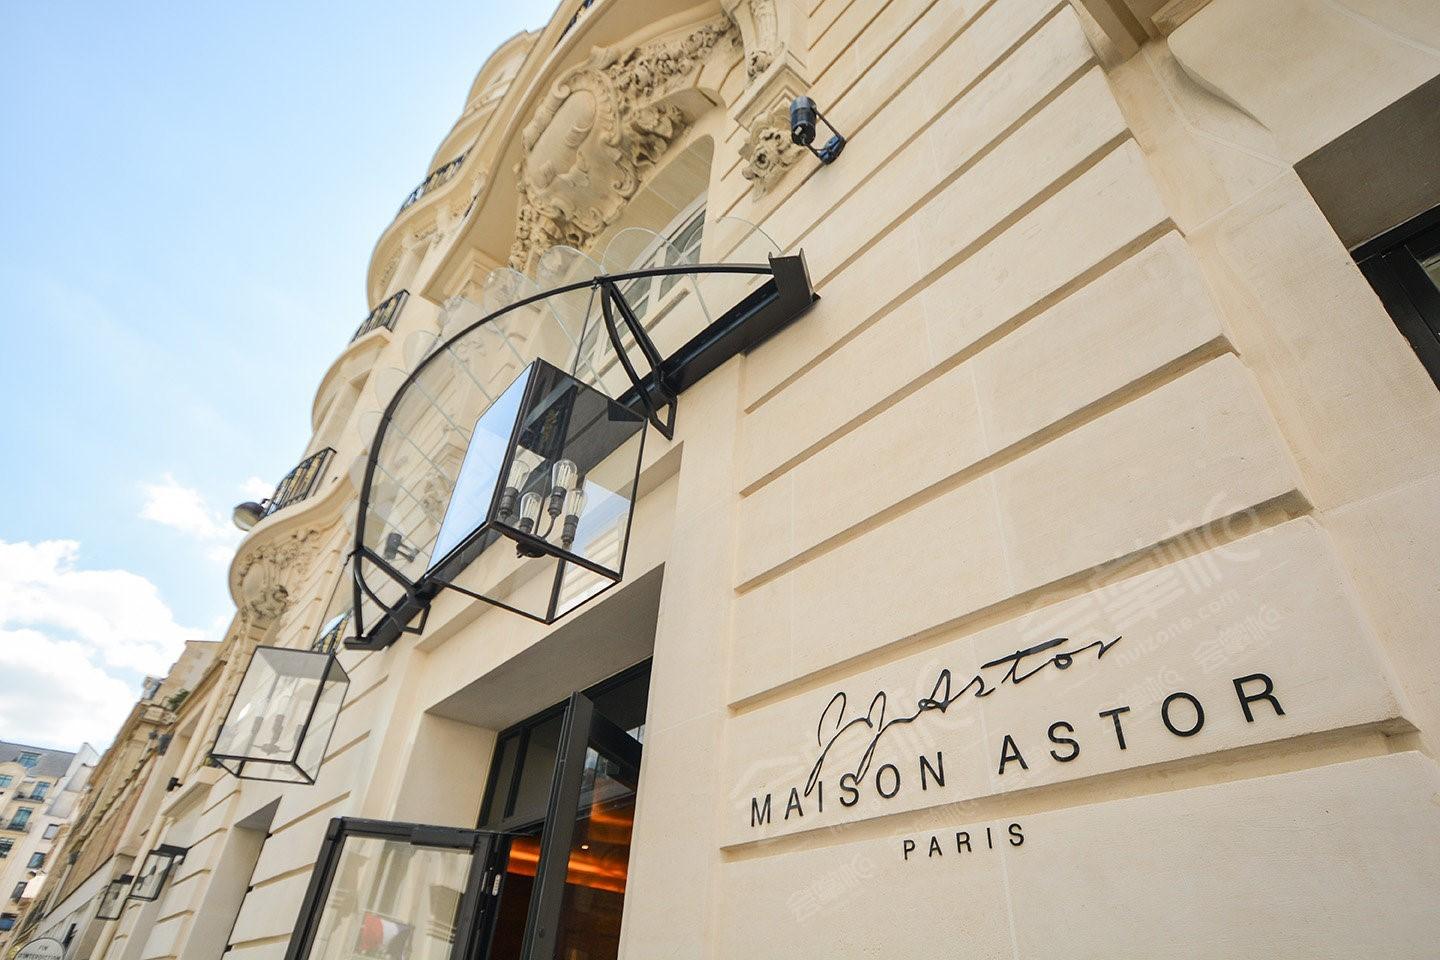 Maison Astor paris